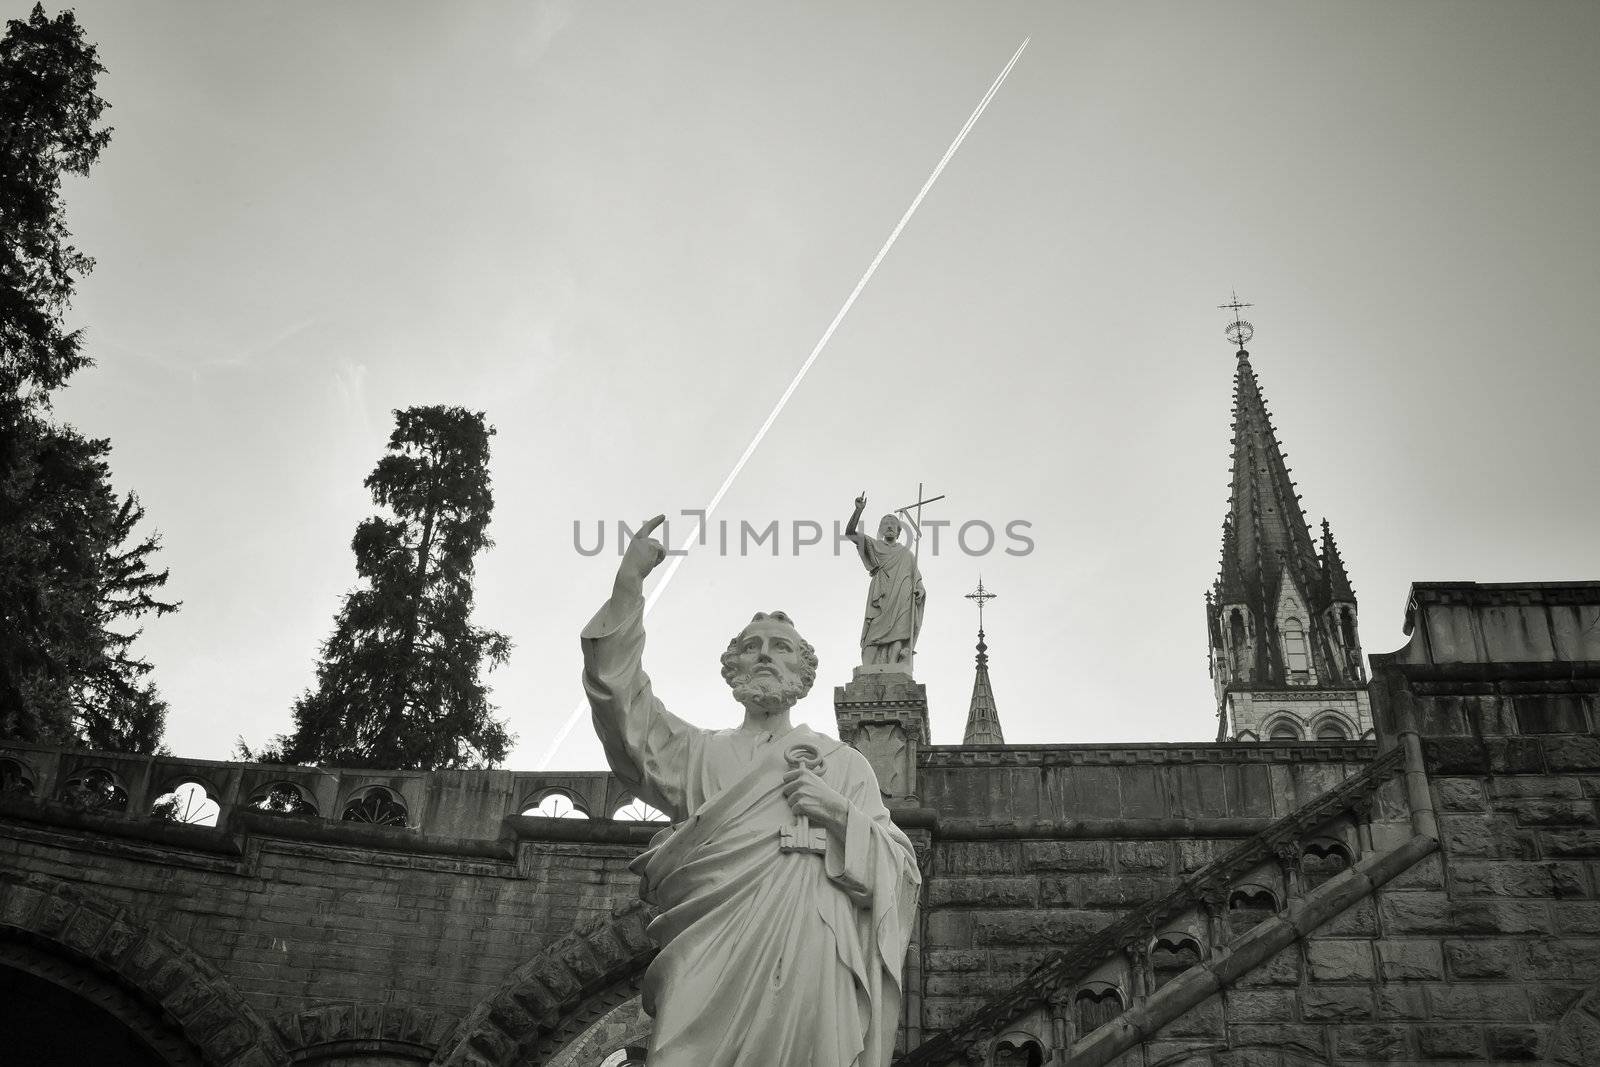 Near to God - Lourdes by ABCDK